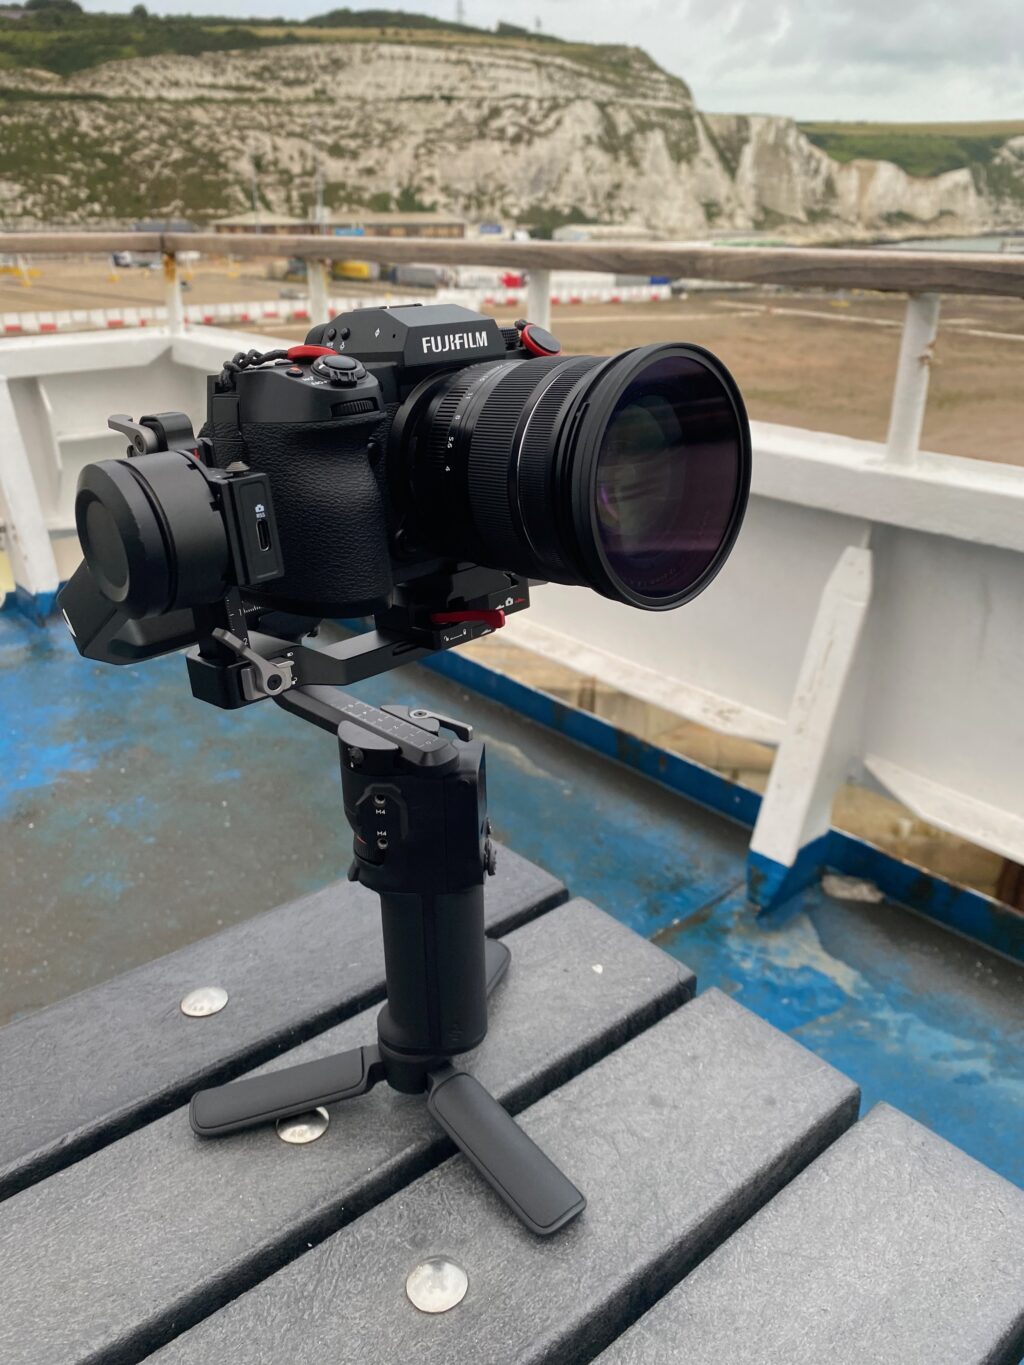 A Fujifilm camera on a DJI gimbal standing on a benchaboard a ferry 